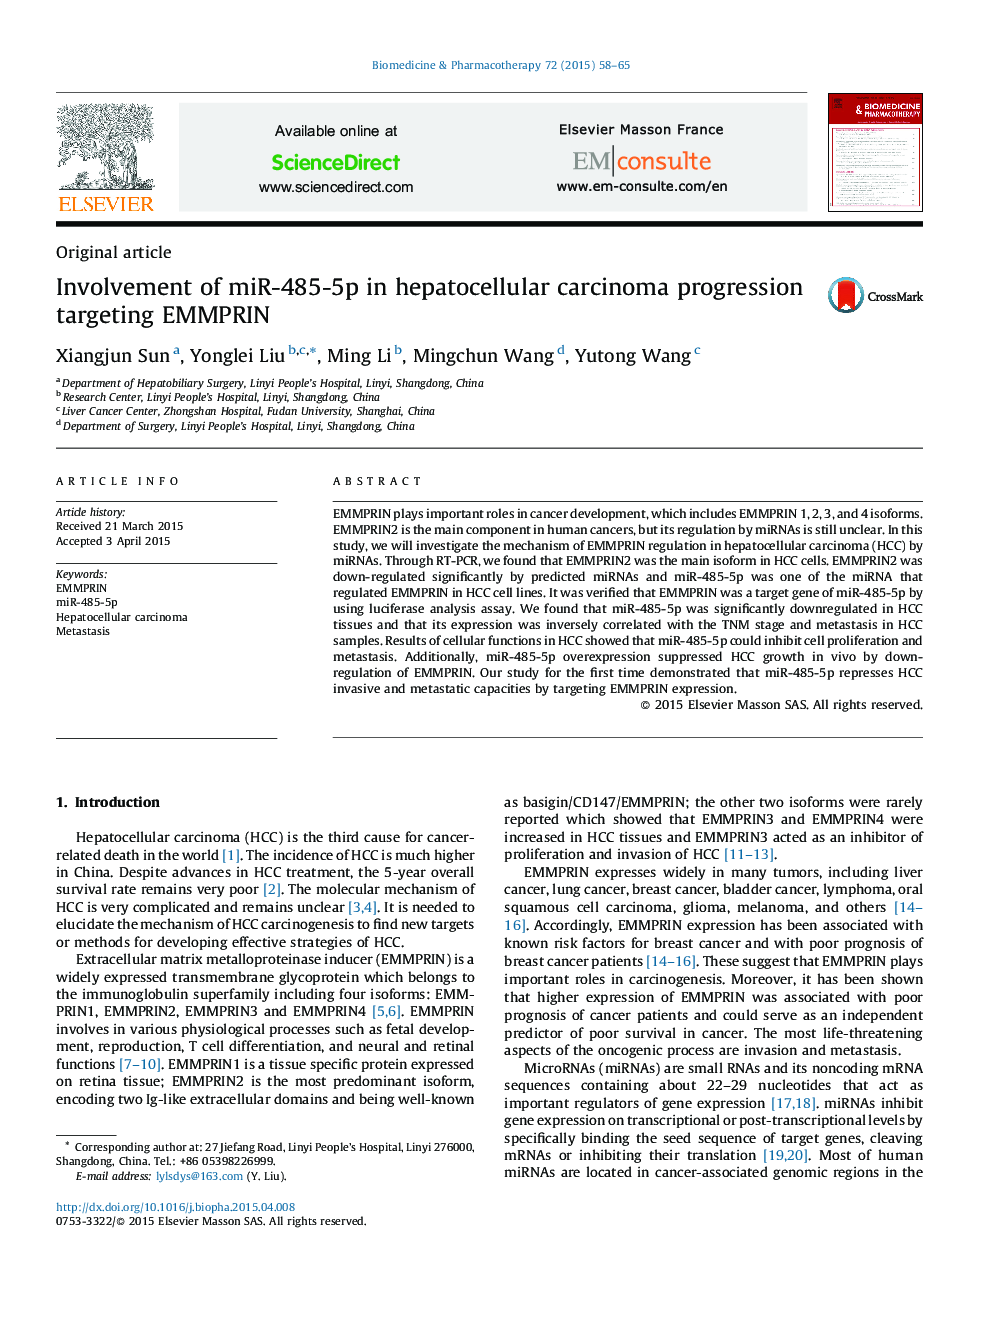 Involvement of miR-485-5p in hepatocellular carcinoma progression targeting EMMPRIN